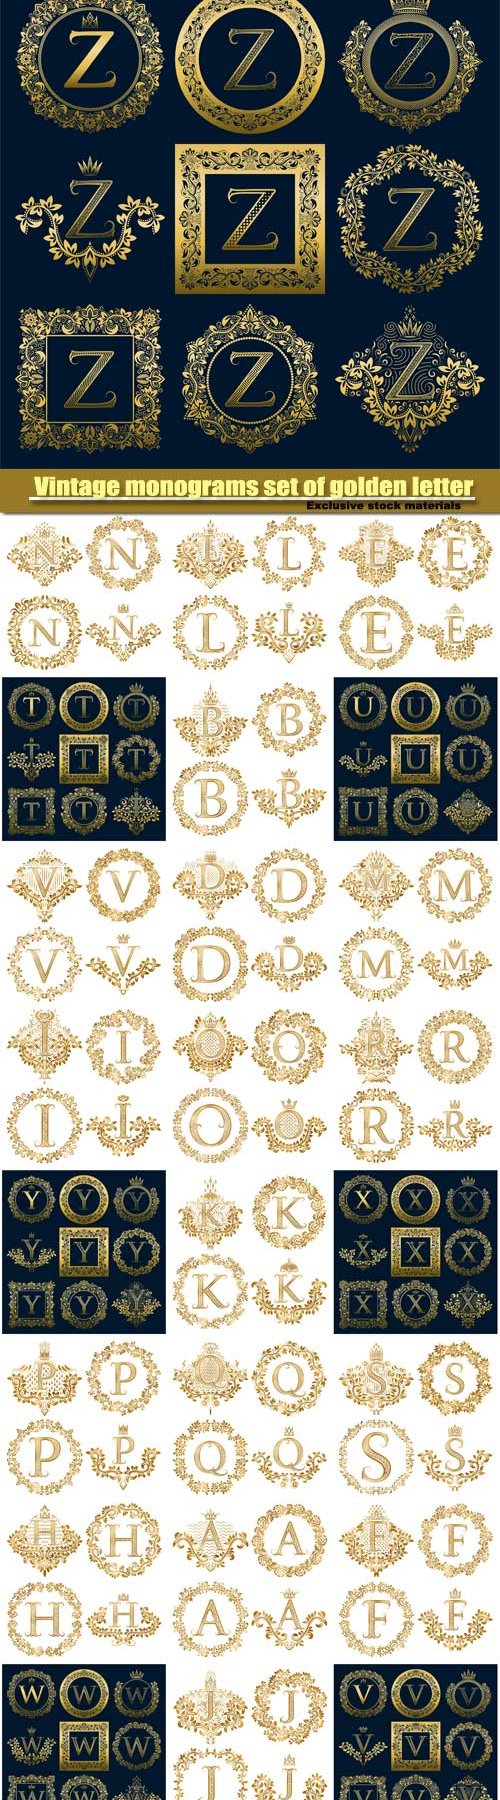 Vintage monograms set of golden letter, heraldic logos